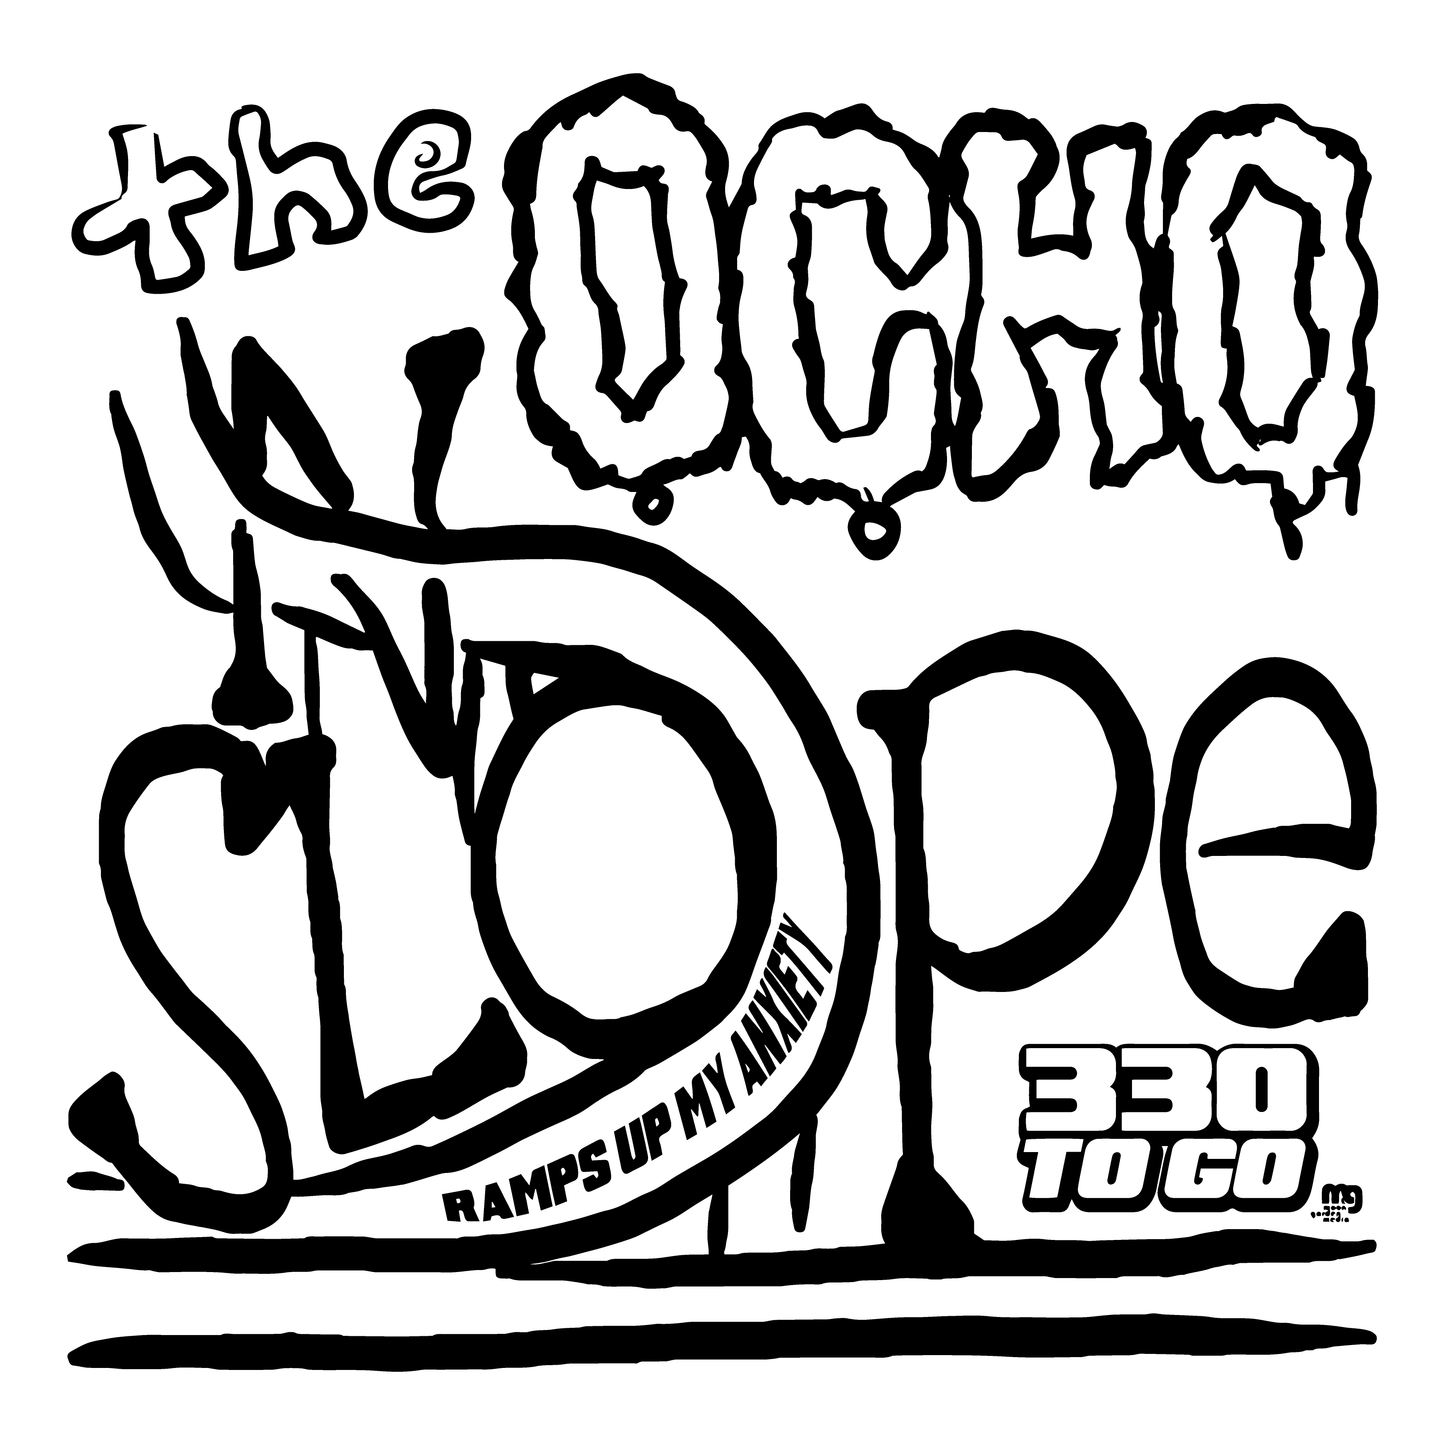 The Ocho Nope Slope Hoodie by Moon Garden Media